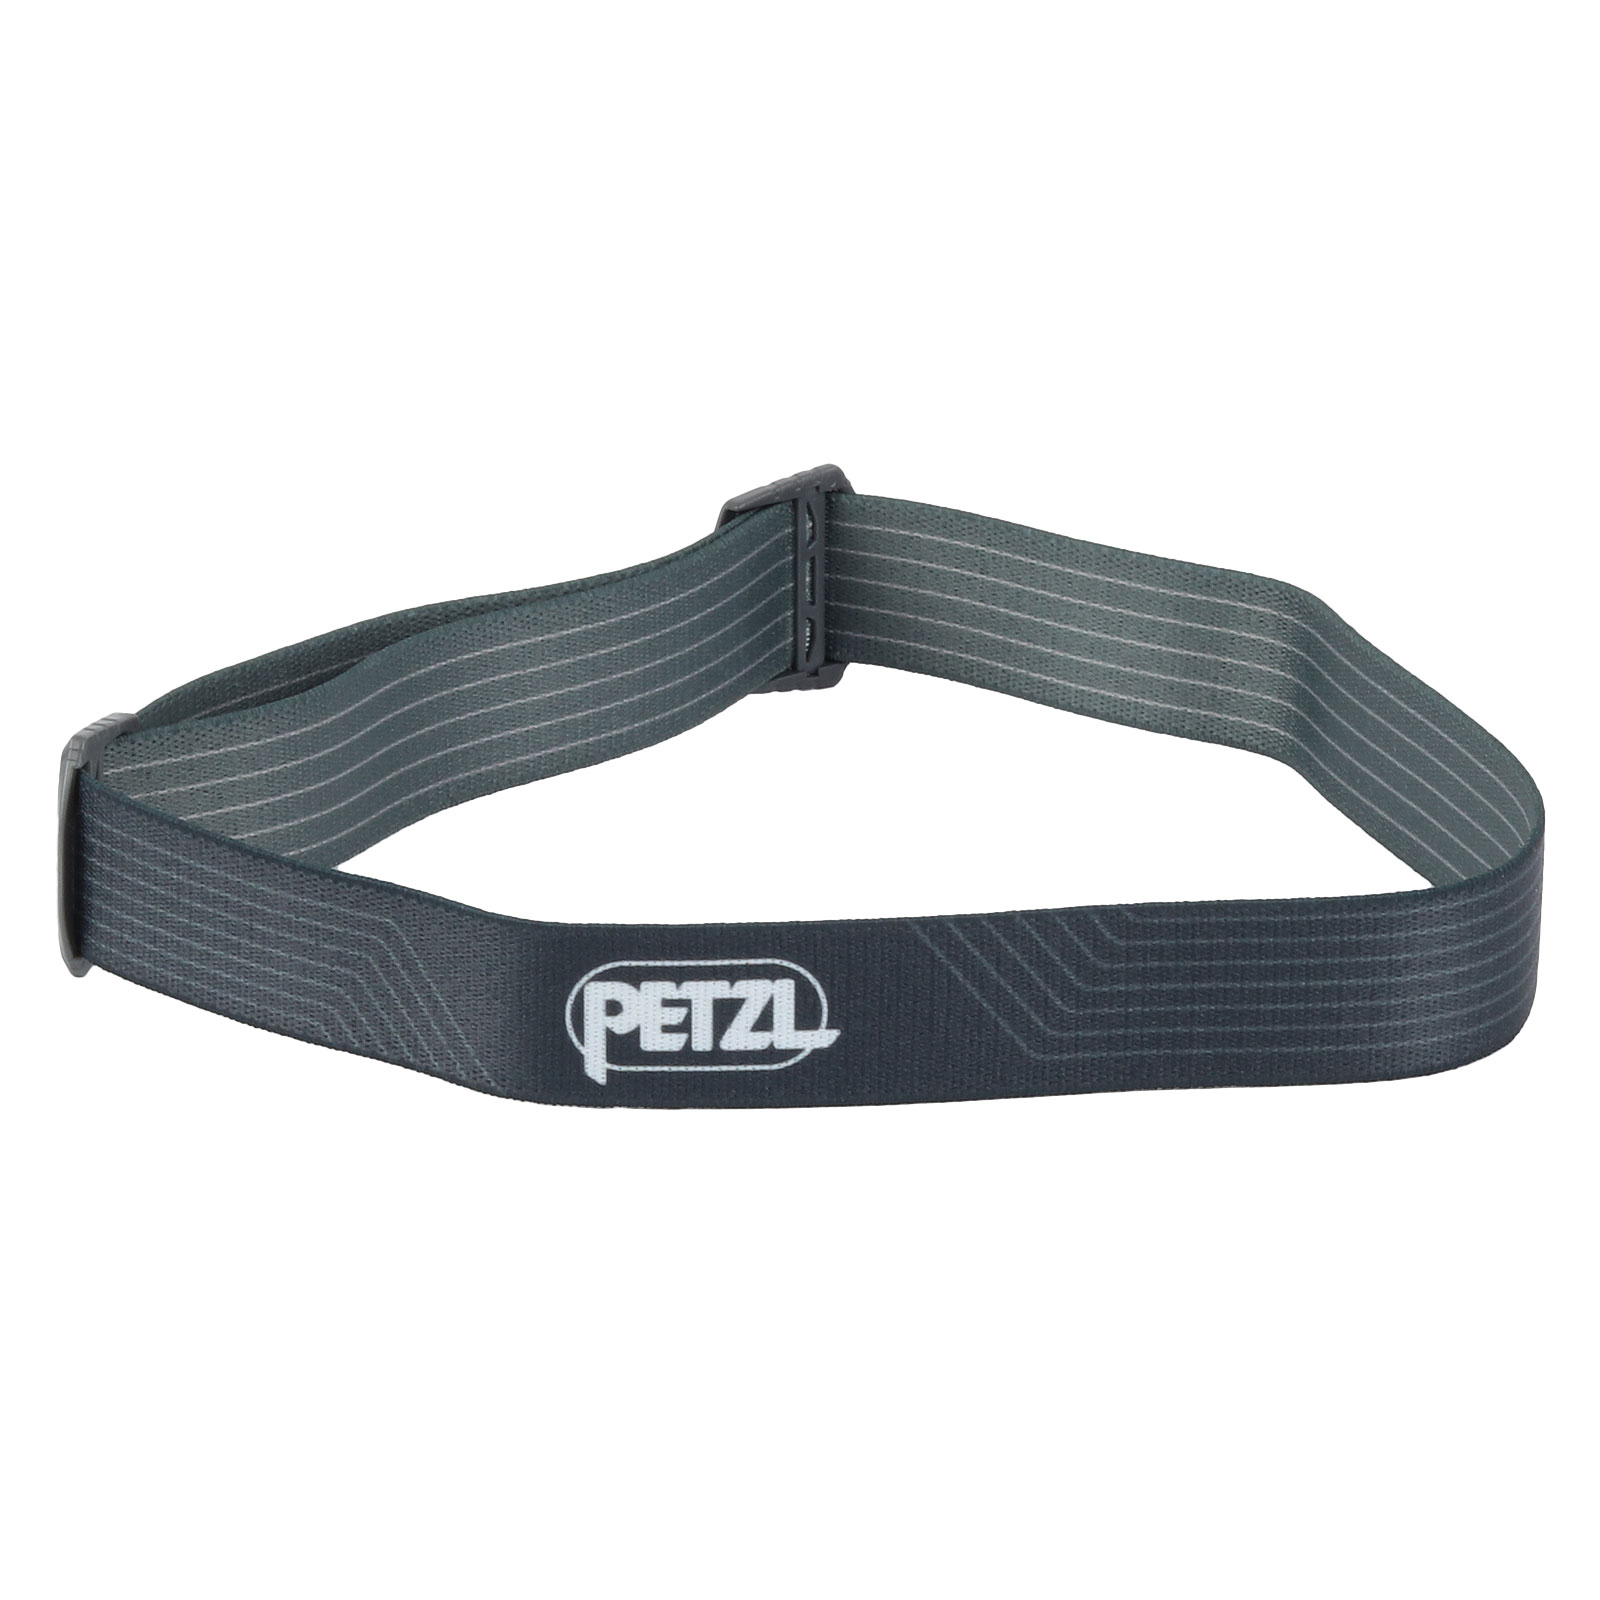 Produktbild von Petzl Ersatzkopfband für Tikkina / Tikka / Actik - grau